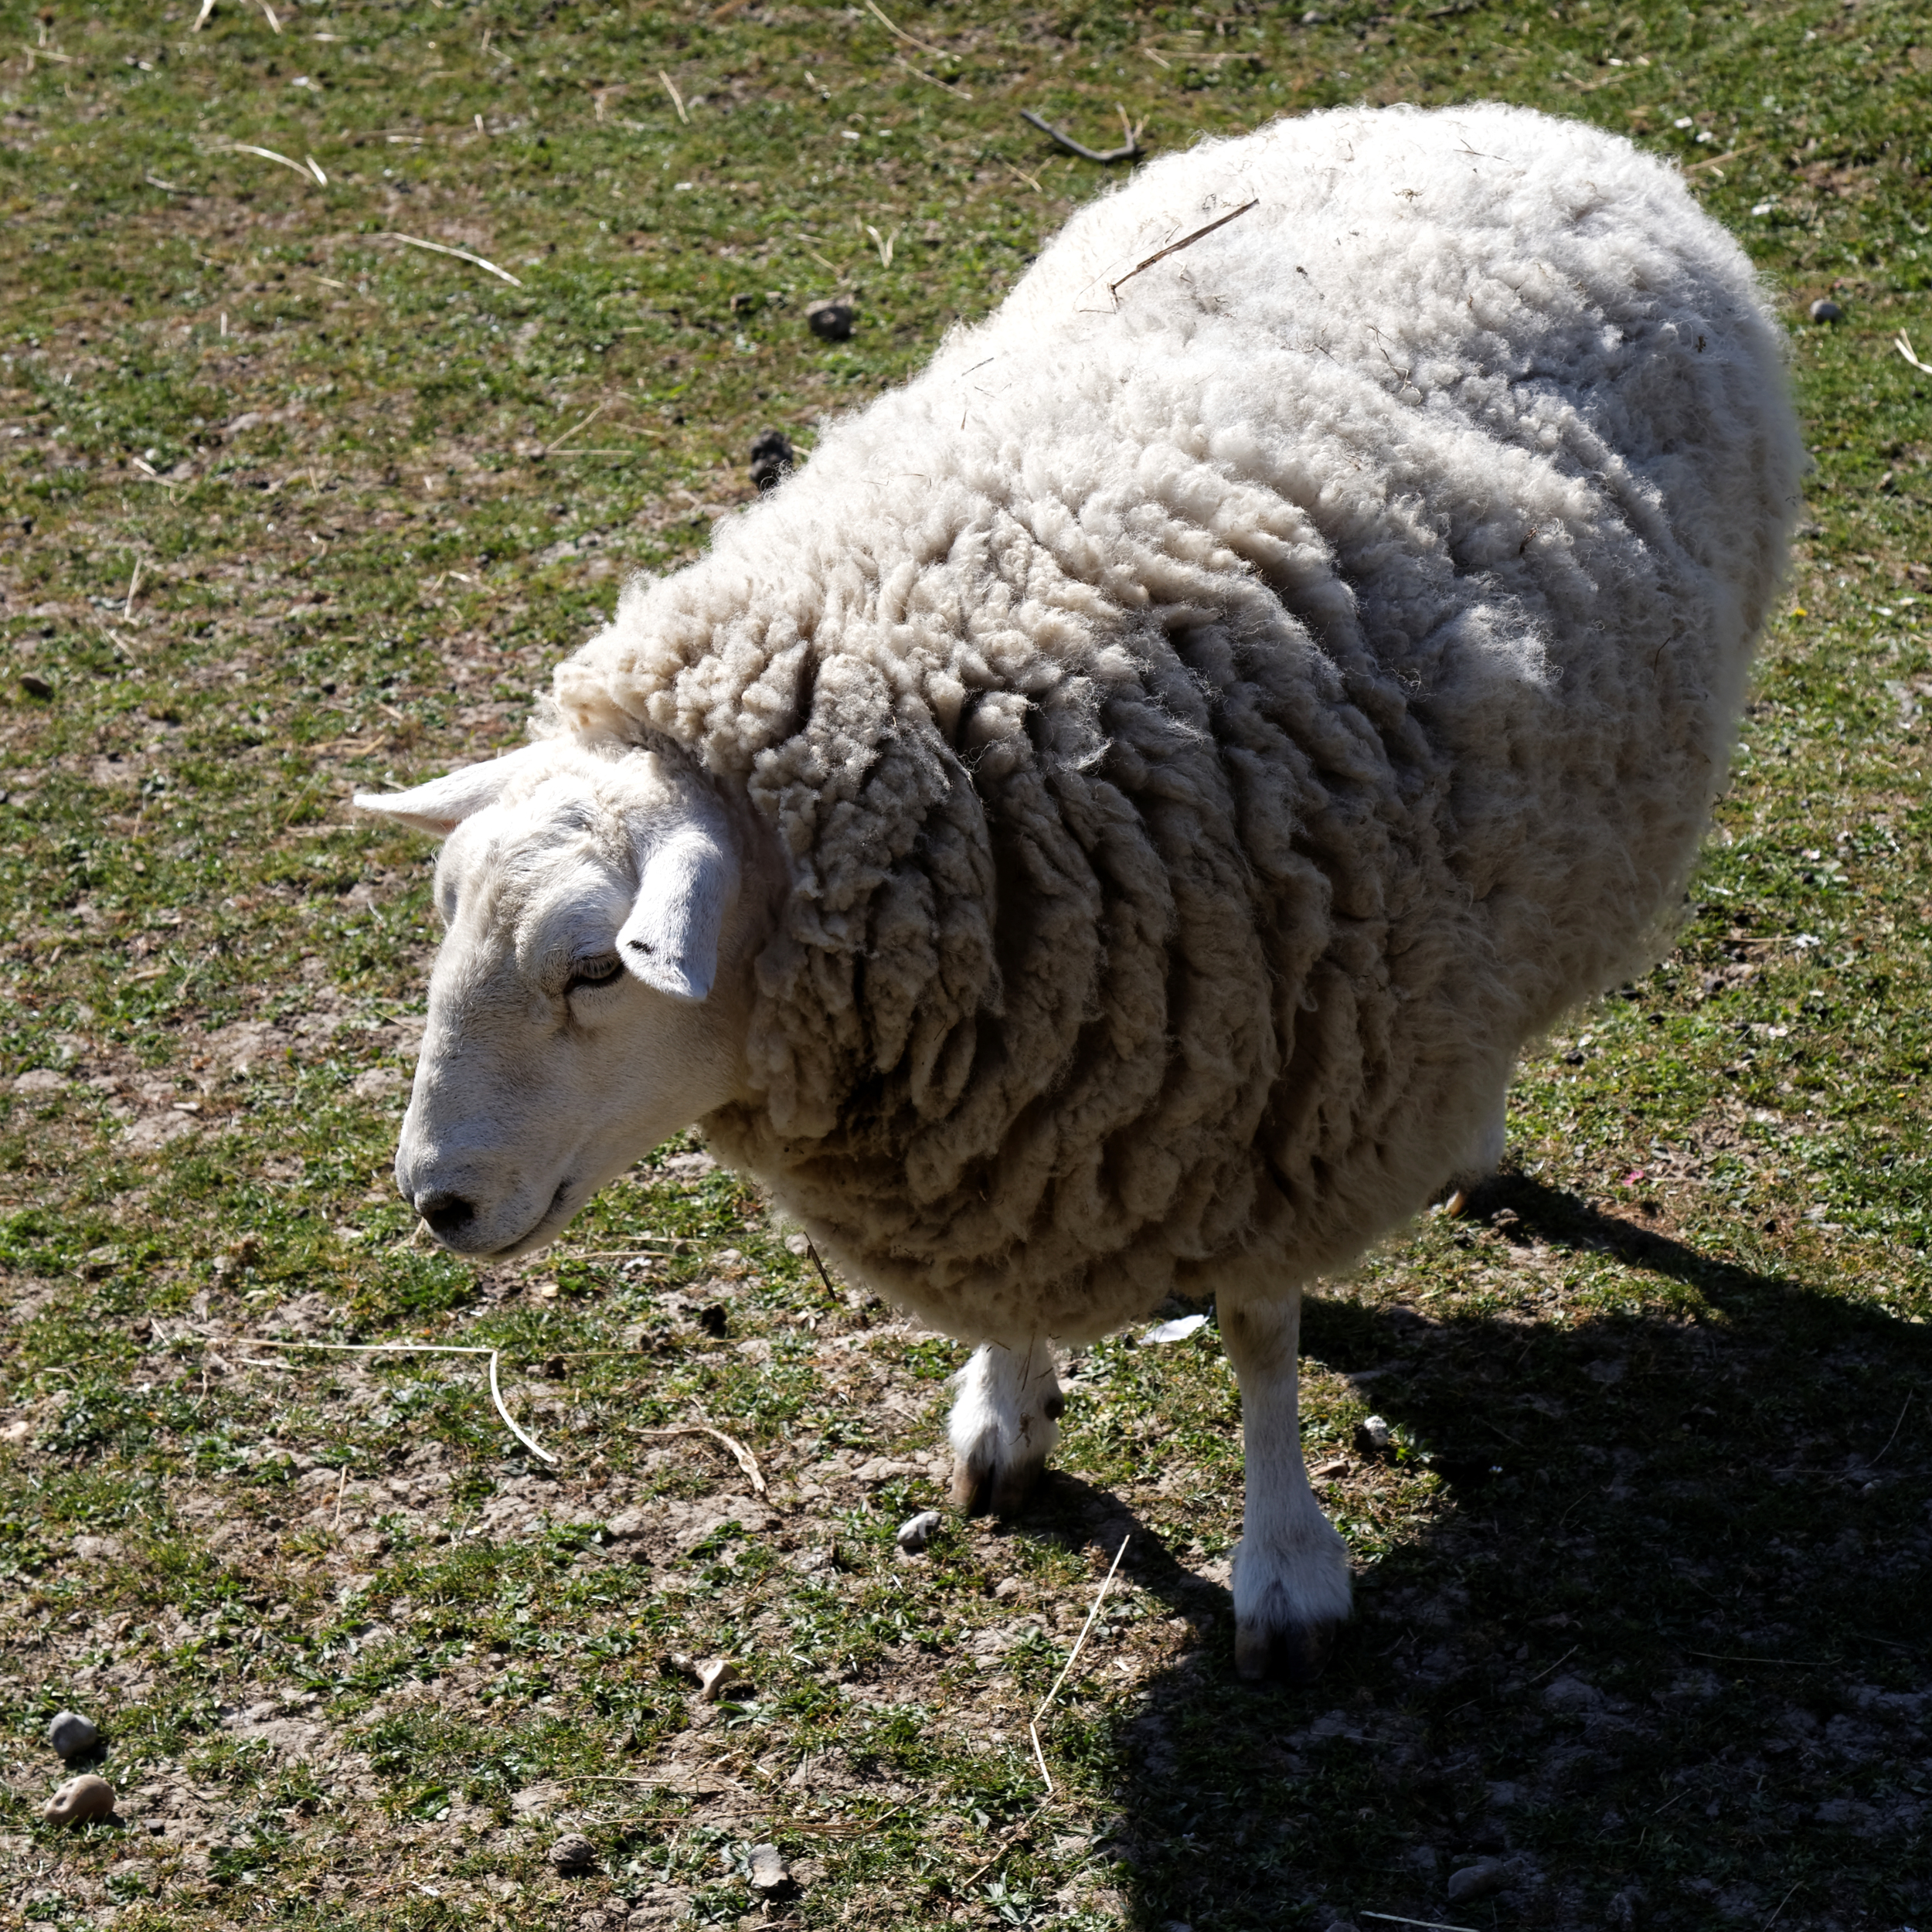 Quex Barn sheep Quex Park Birchington Kent England